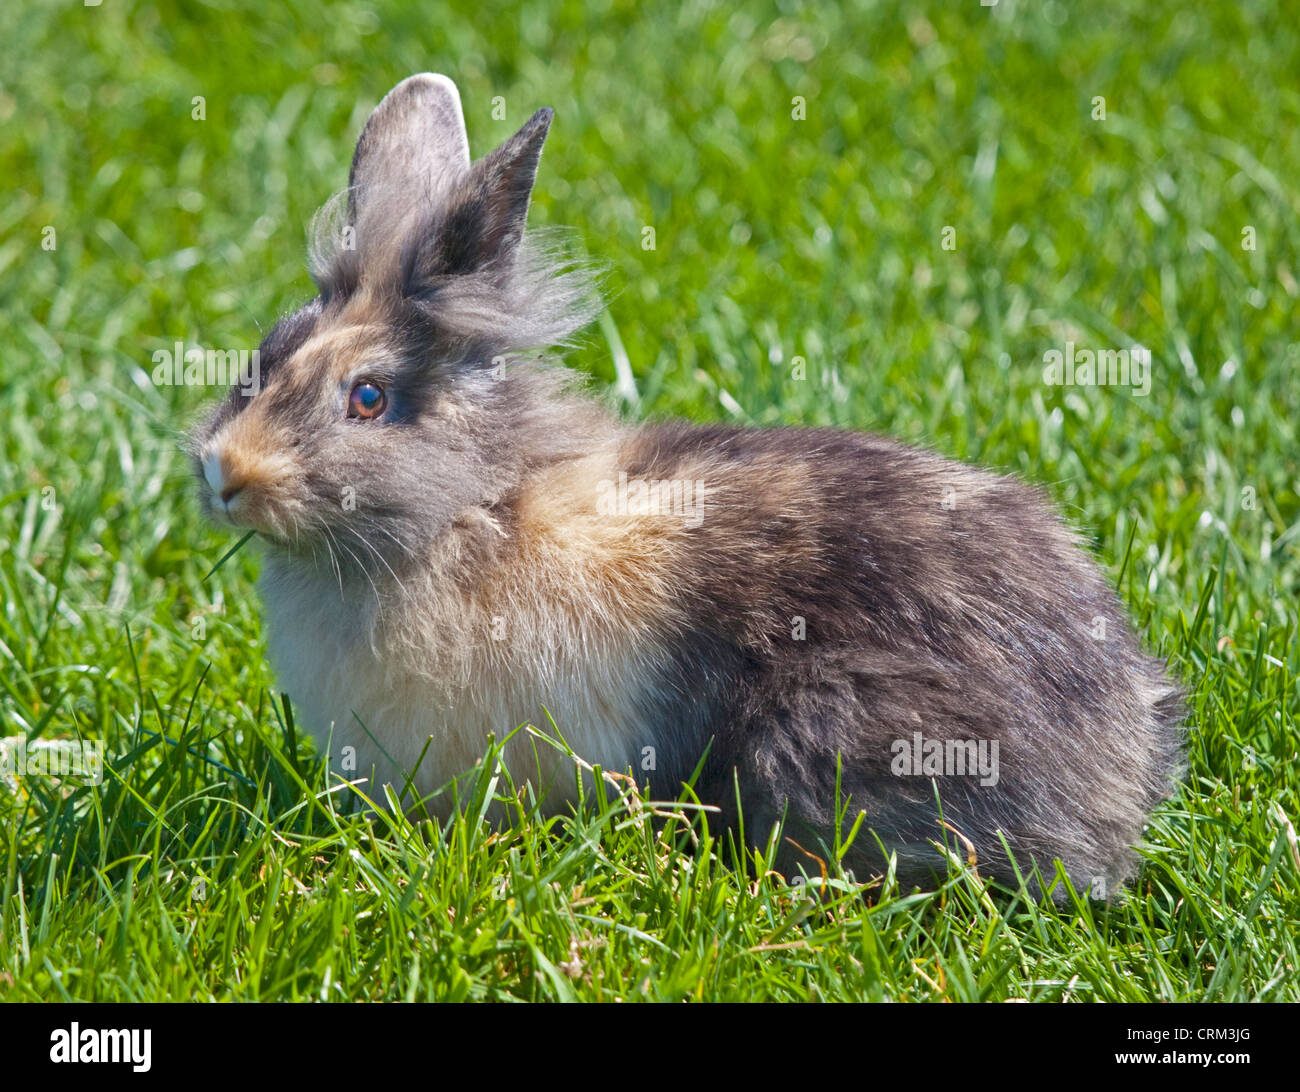 Harlequin Coloured Lionhead Rabbit Uk Stock Photo Alamy